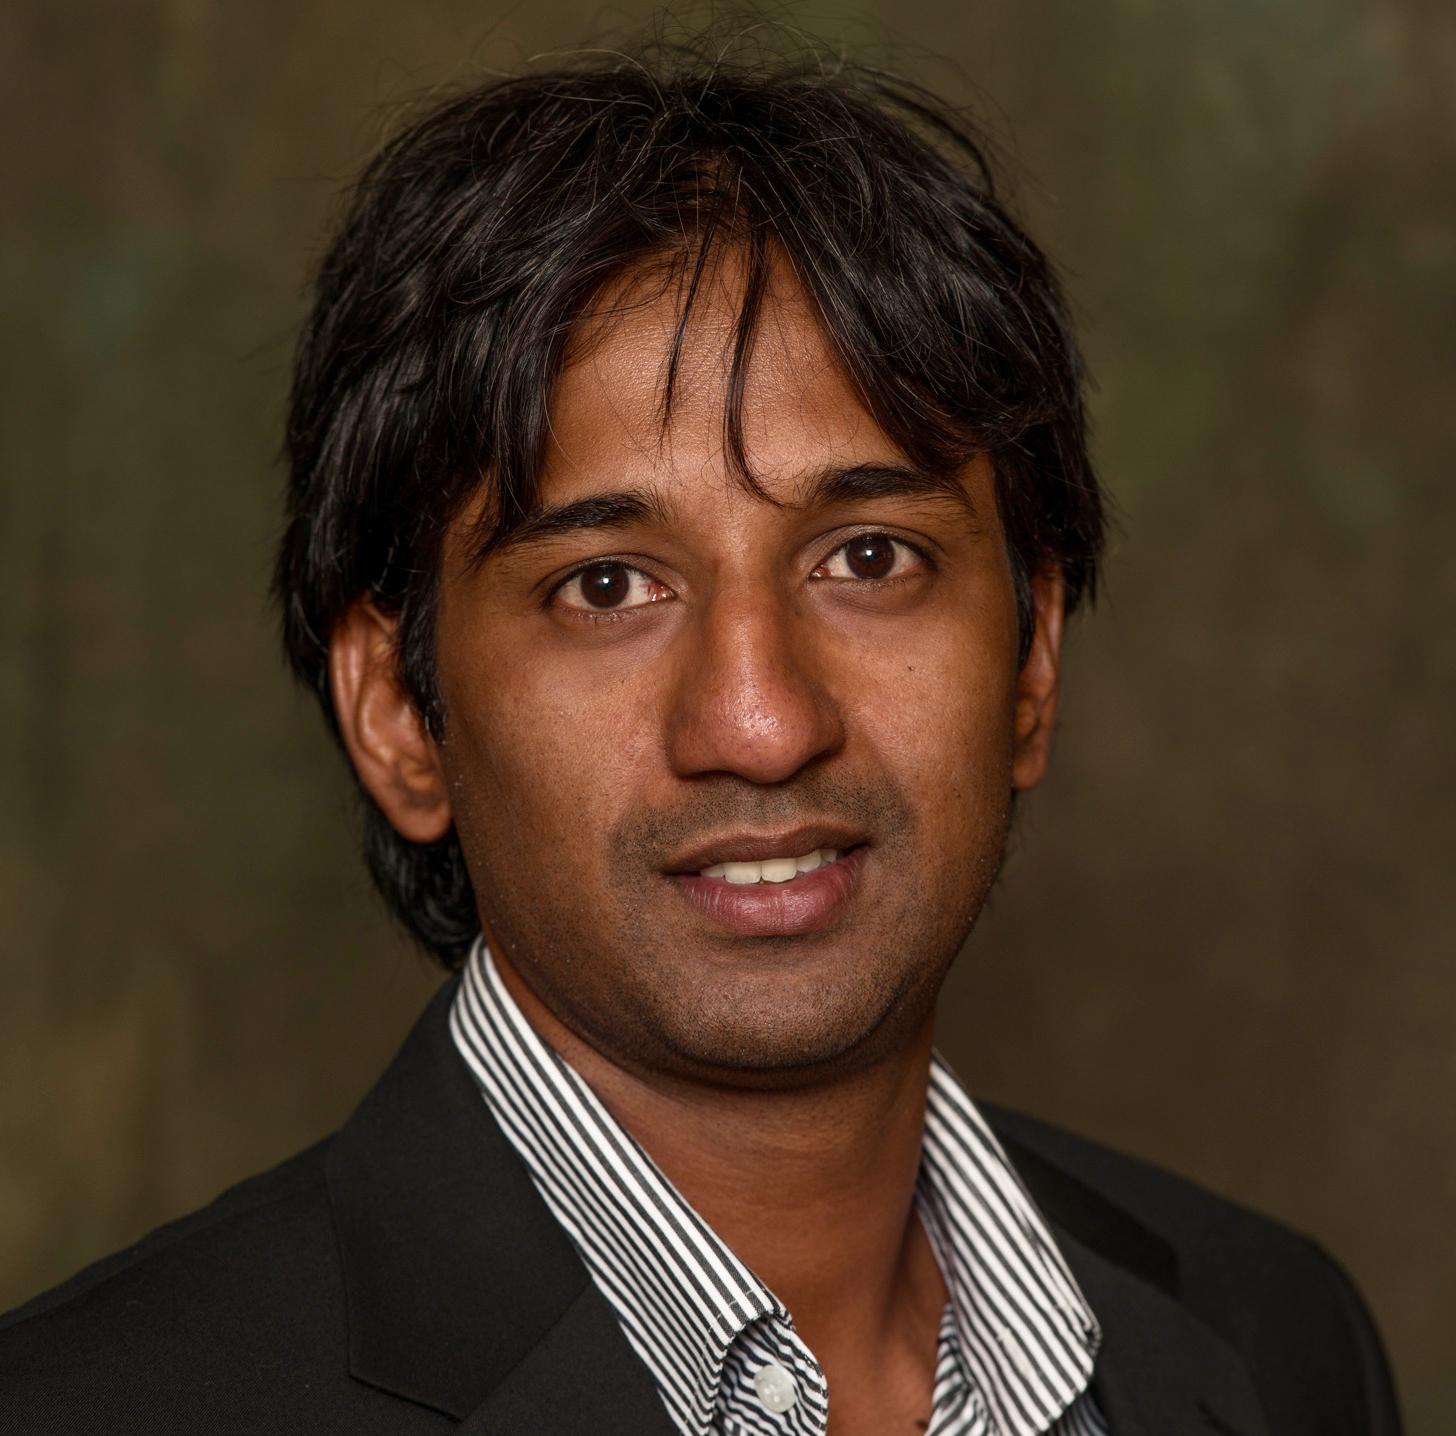 Assistant Professor Vishnu Boddeti of Michigan State University